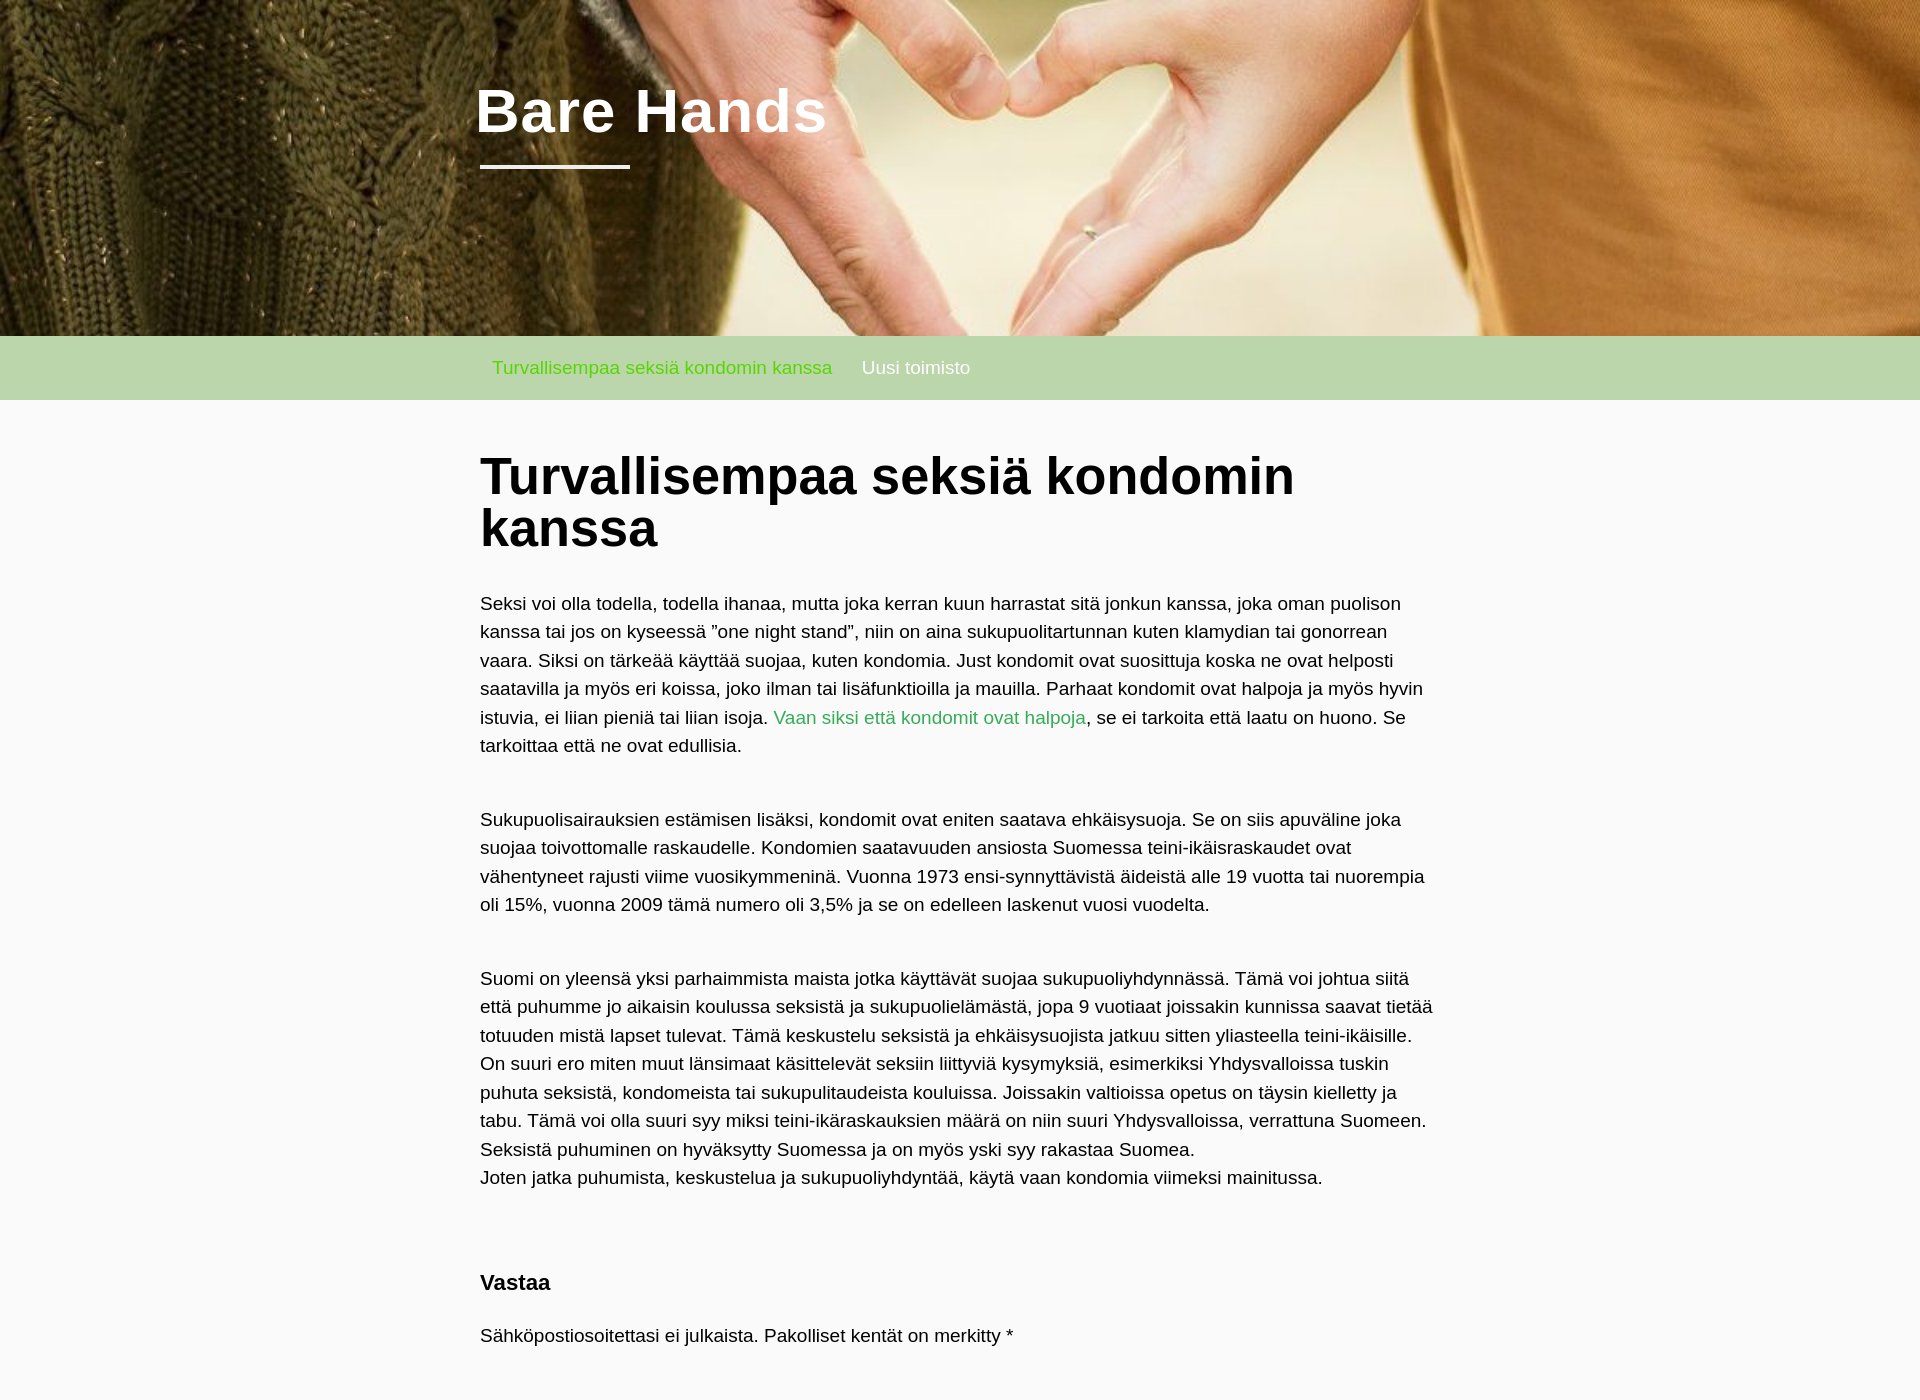 Näyttökuva barehands.fi